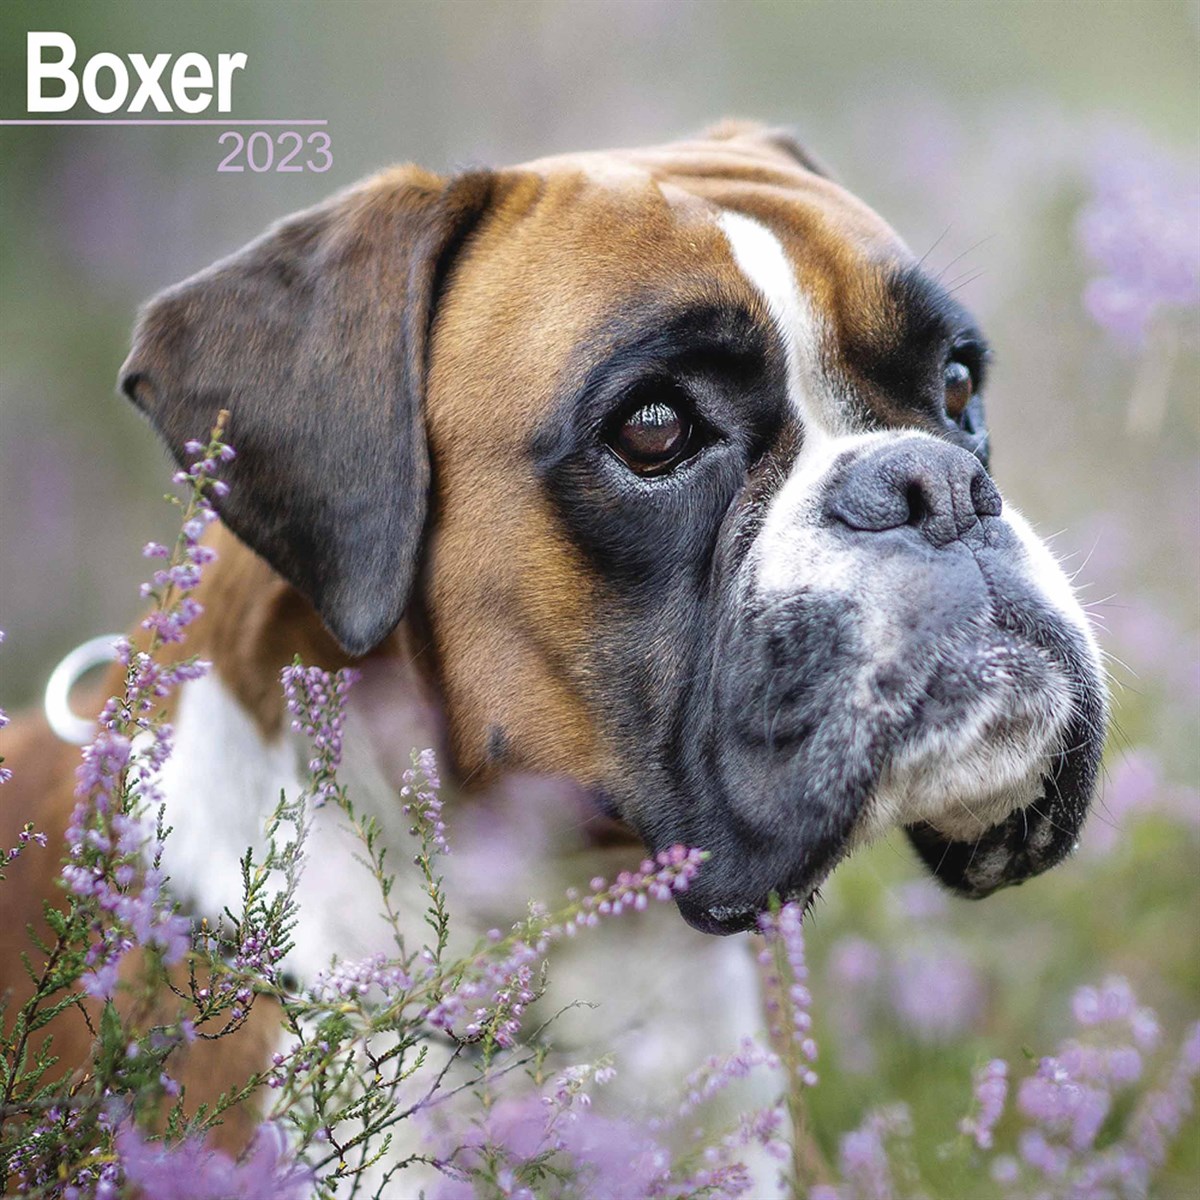 Boxer 2023 Calendars